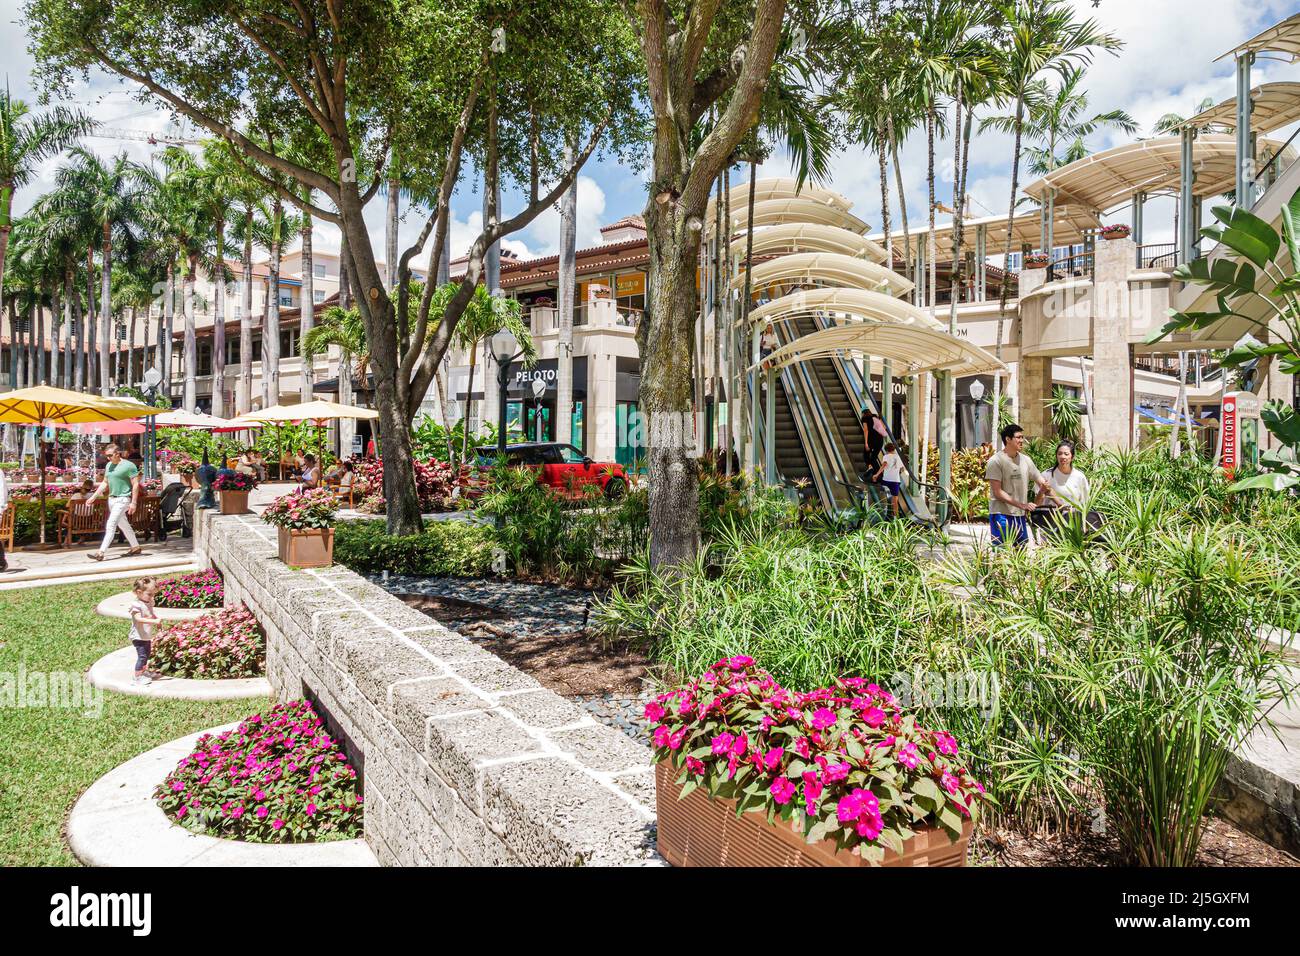 Miami Florida Coral Gables Shops im gehobenen Outdoor-Einkaufszentrum Merrick Park Stockfoto